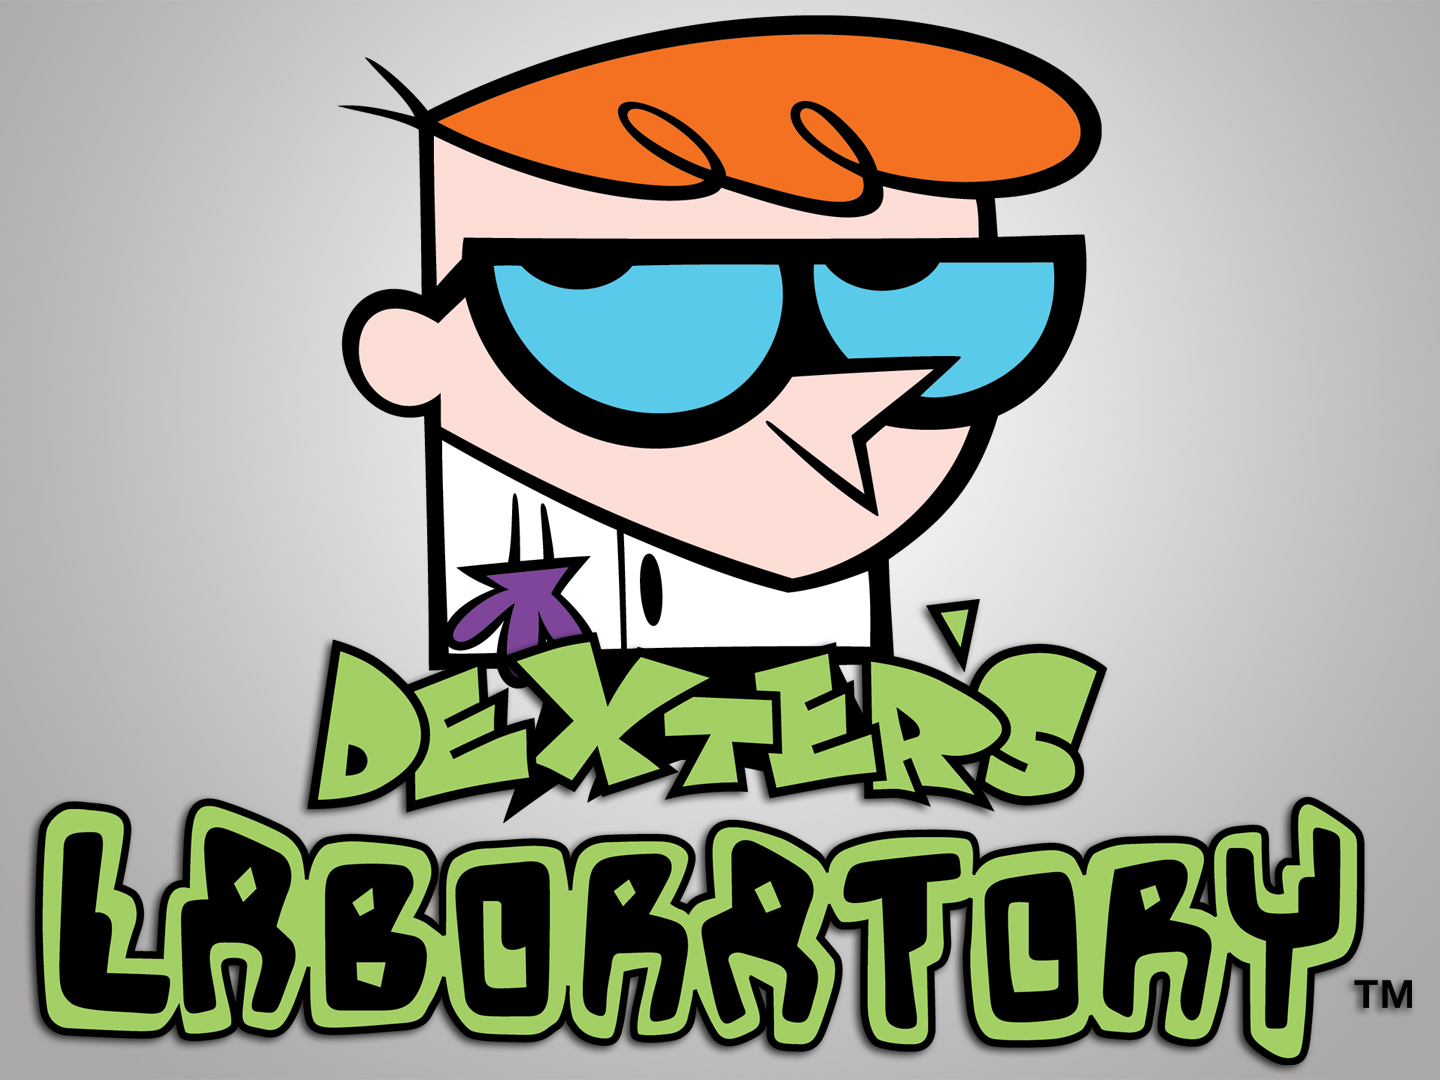 TV Show Dexter's Laboratory Wallpaper